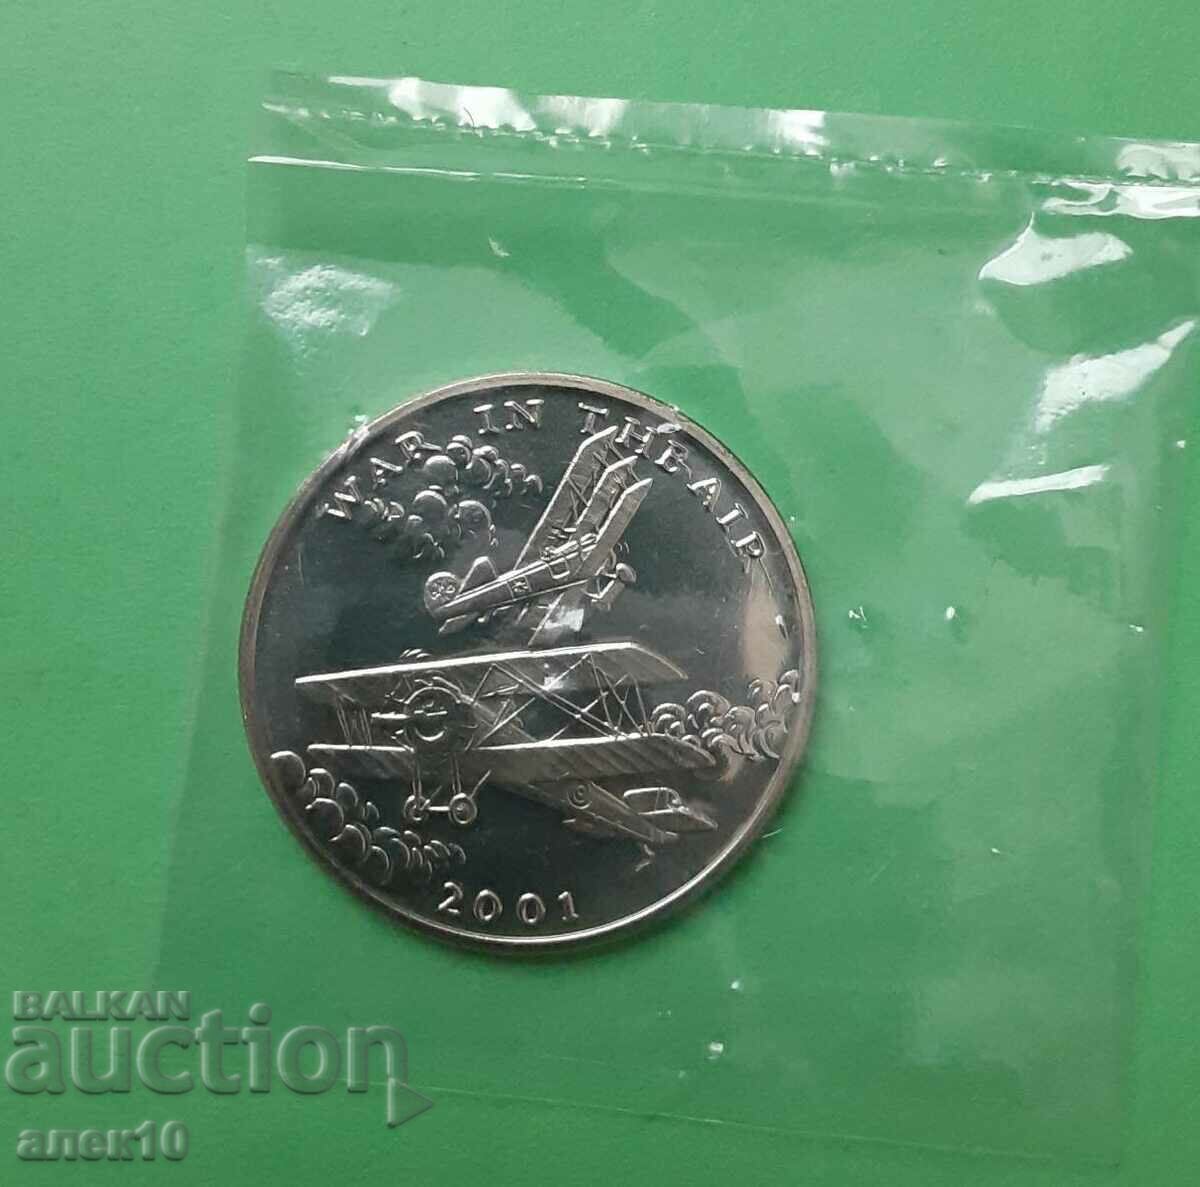 Liberia 5 Dollar 2001 1